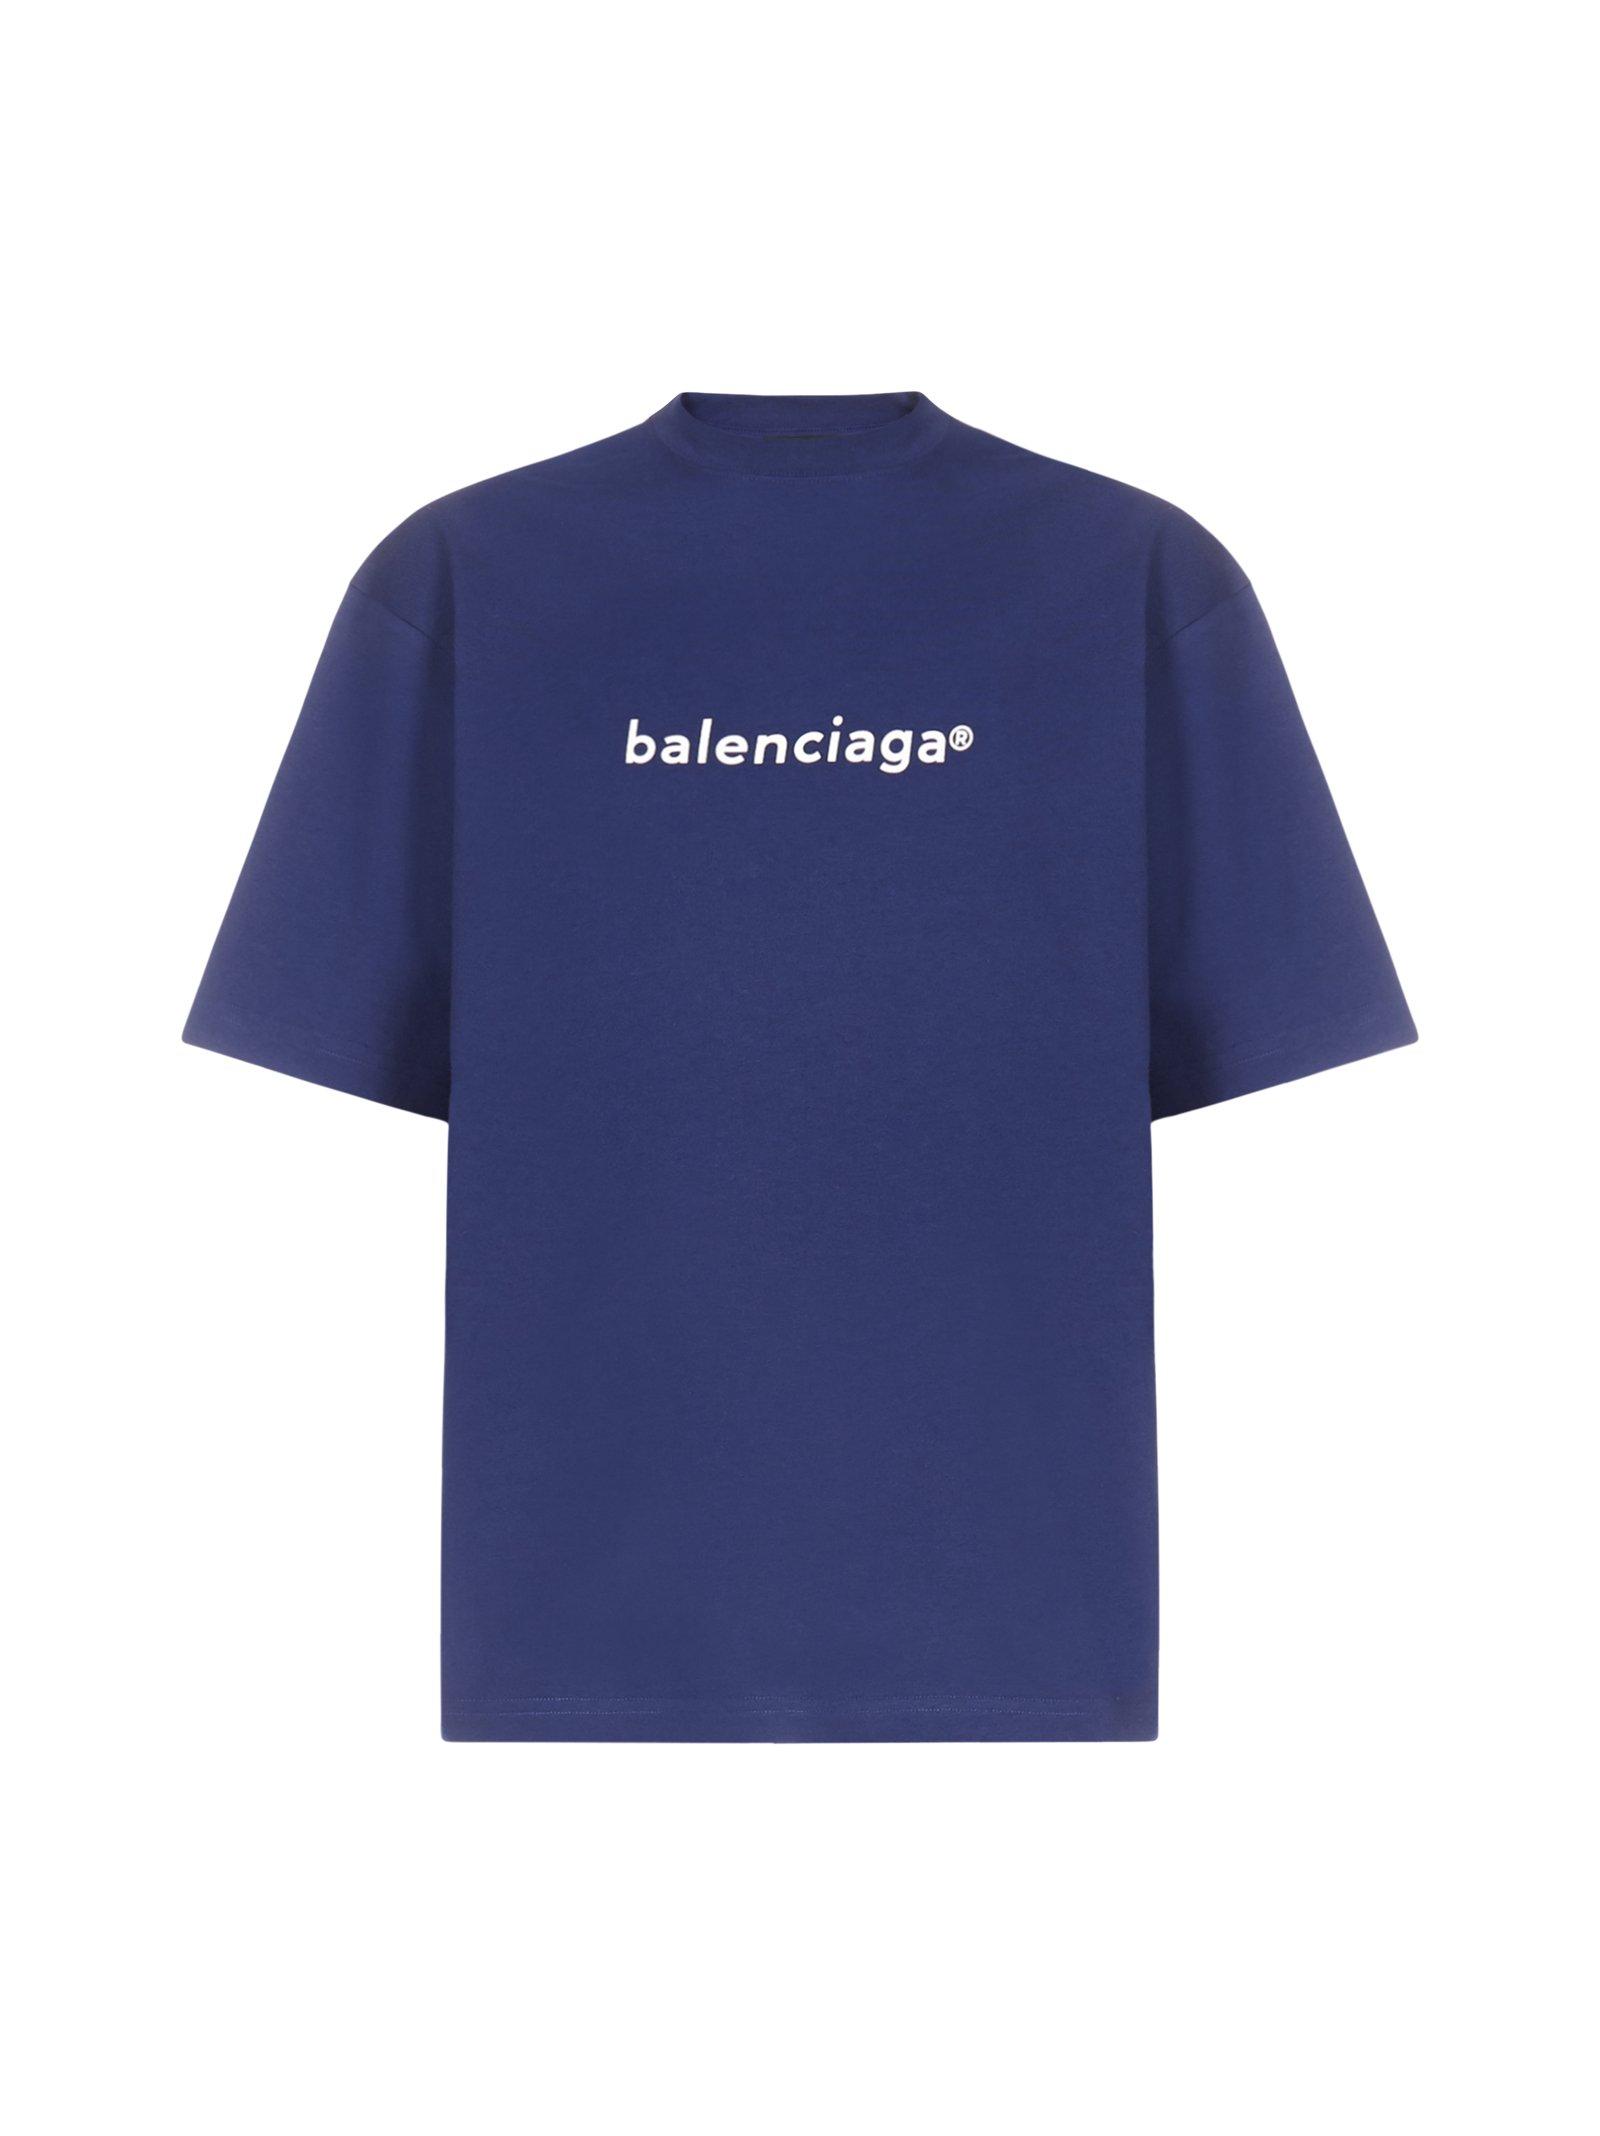 Balenciaga Cotton Logo T-shirt in Blue for Men - Lyst